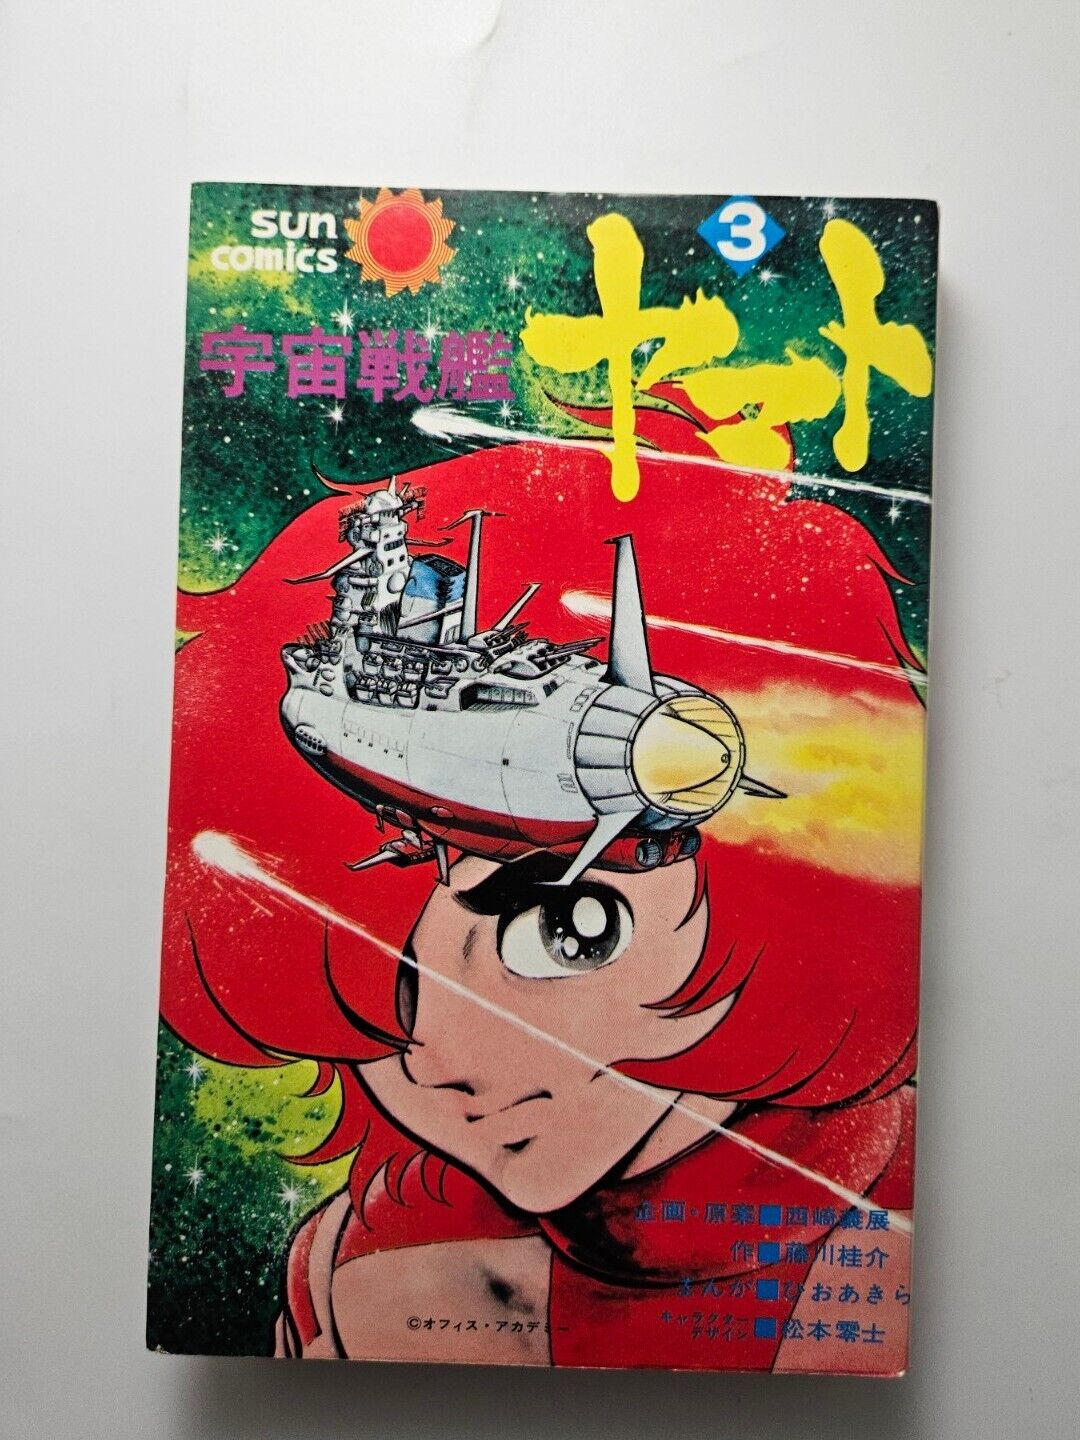 Japanese Manga Asahi Sonorama Sun Comics Hio Akira Space Battleship Yamato Vol 3